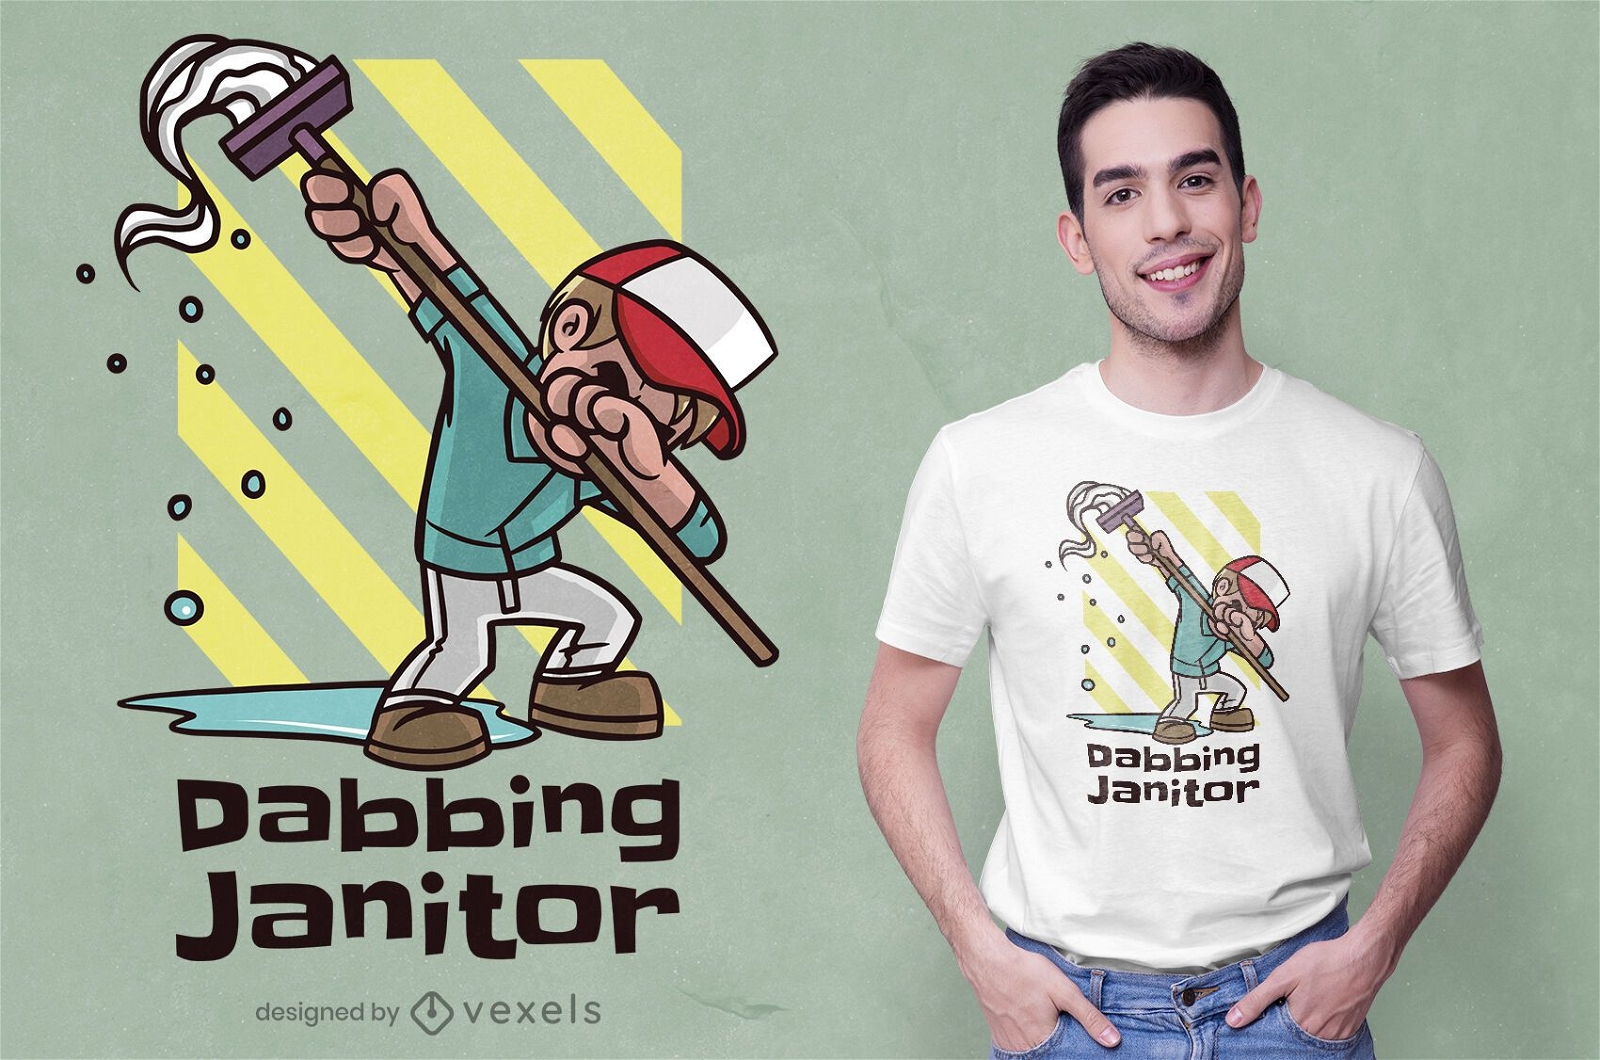 Dabbing janitor t-shirt design